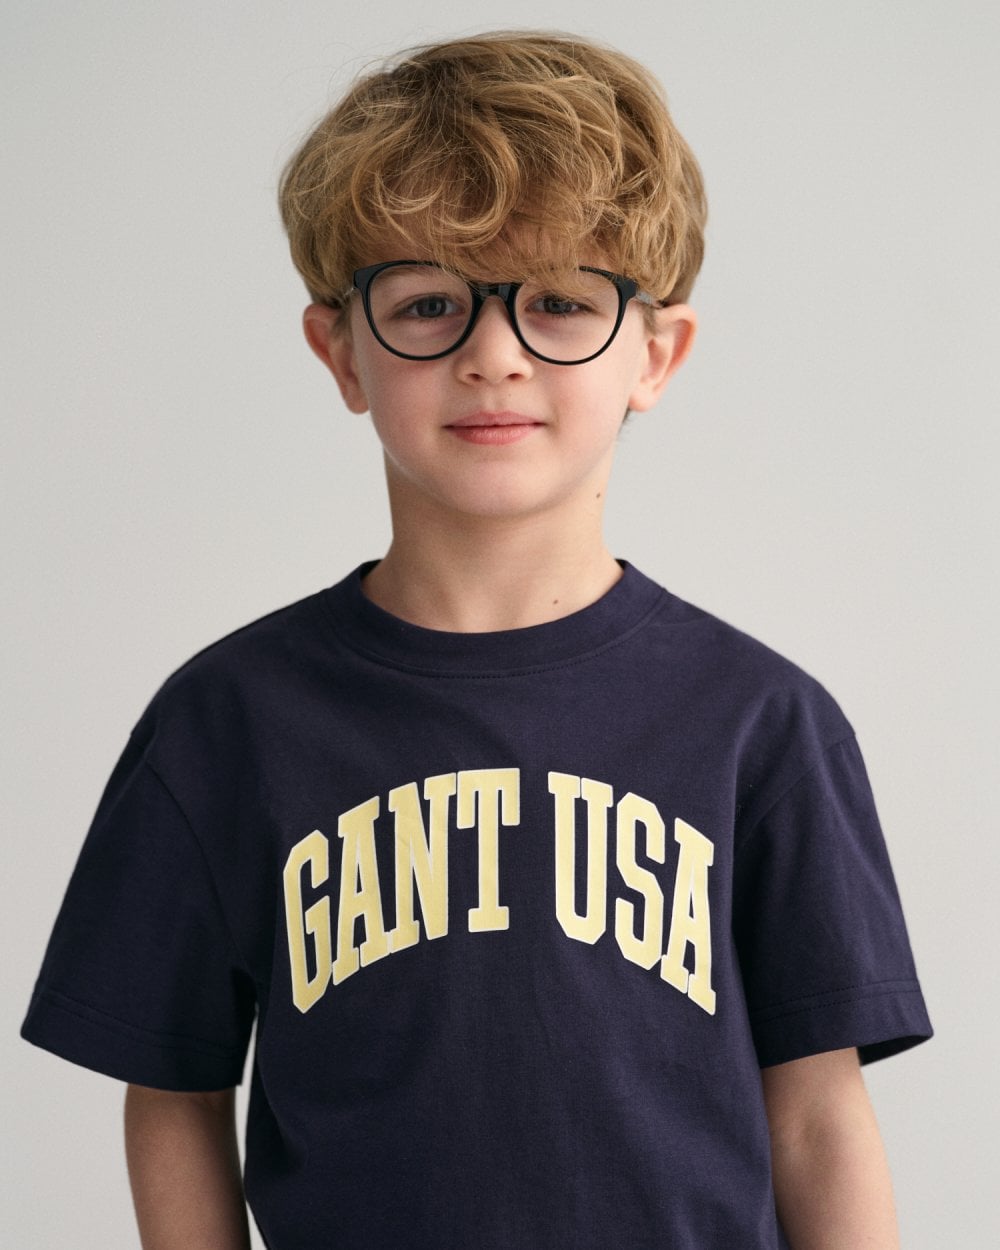 Kids Gant Usa T-Shirt